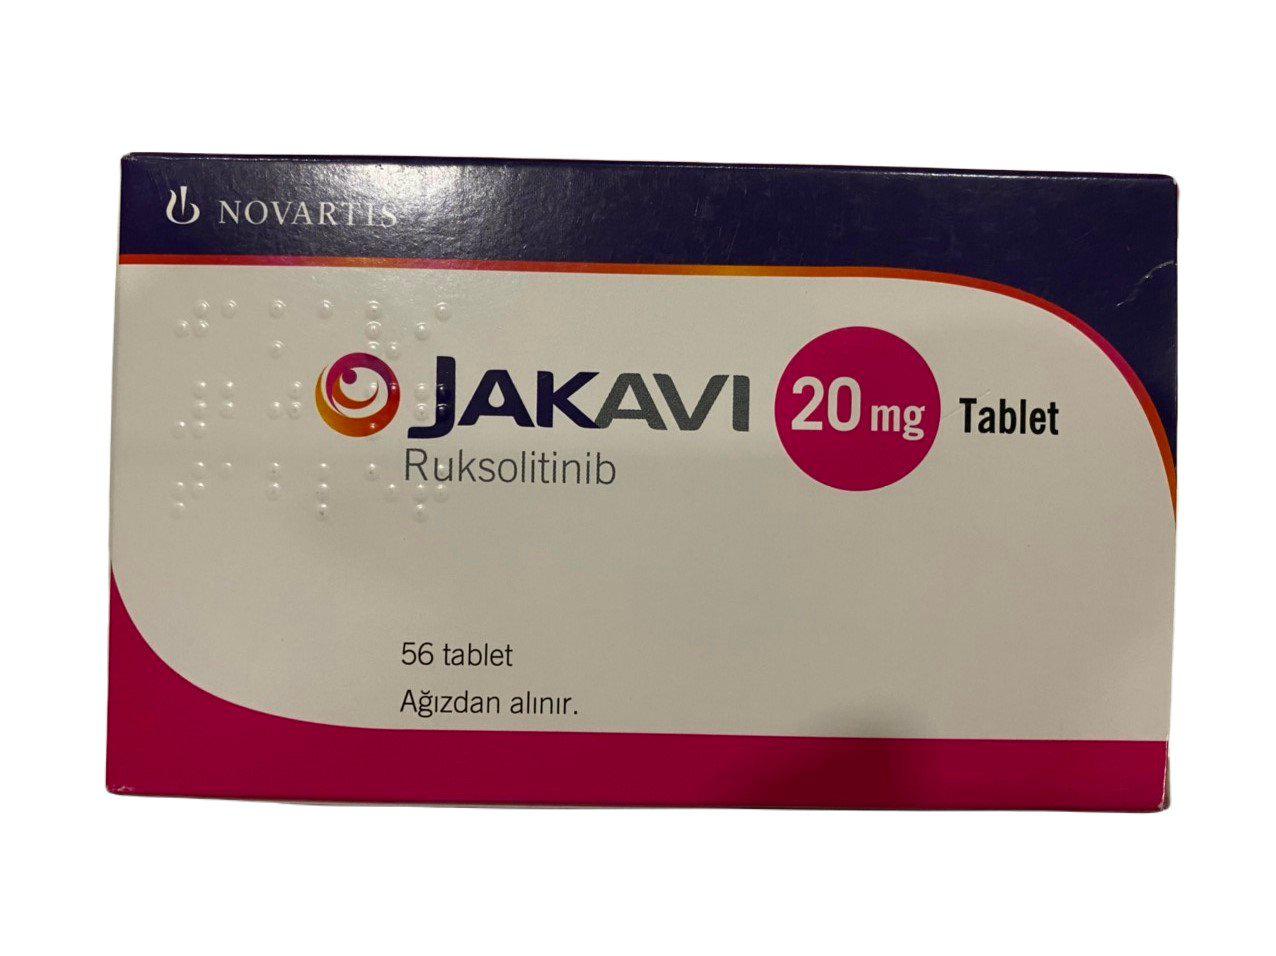 JAKAVI 20mg  (Ruxolitinib) NOVARTIS (H/56V) TNK